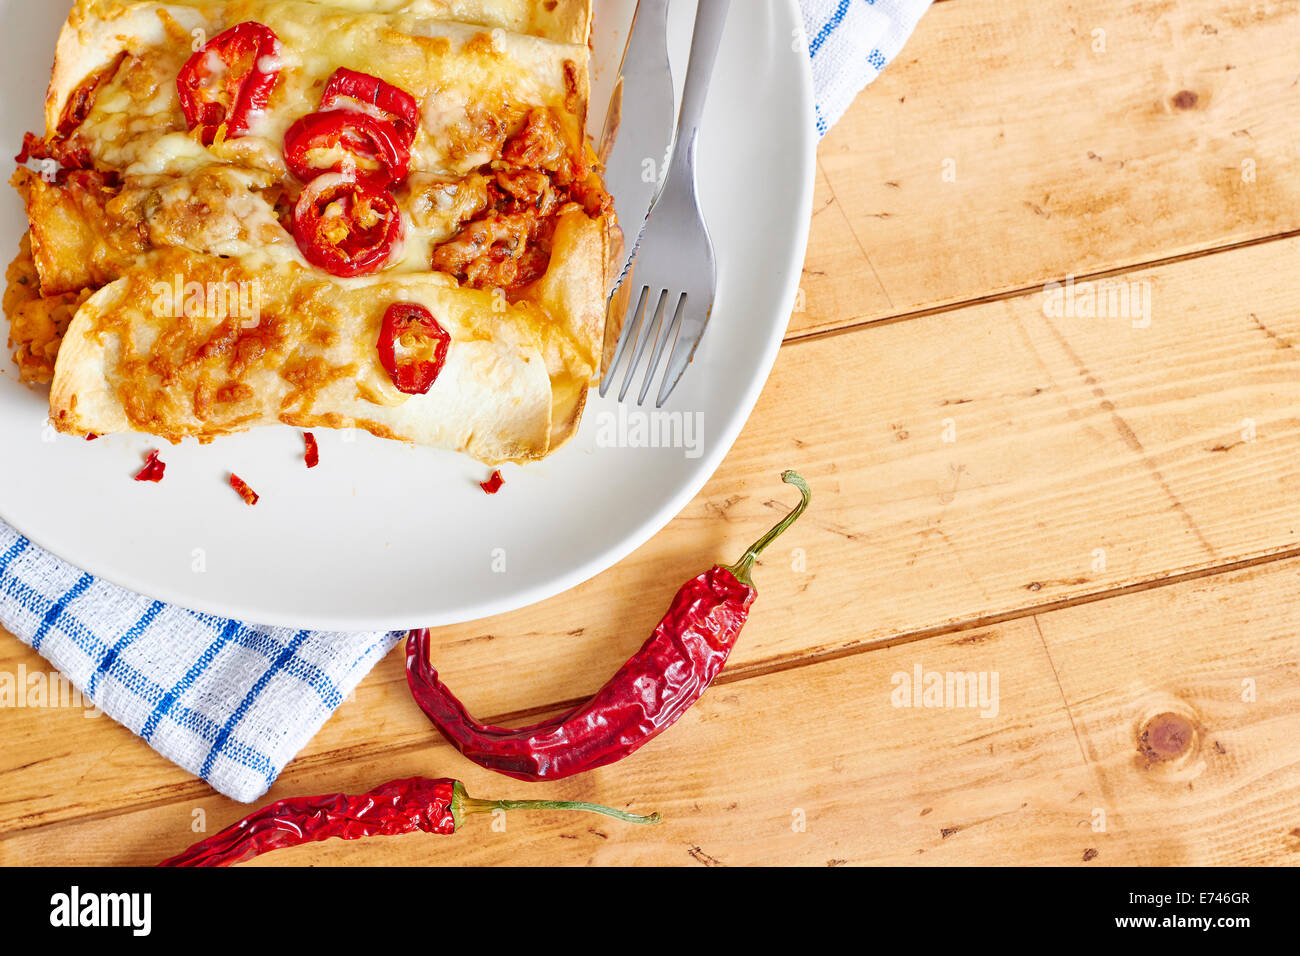 Enchilada dish on wooden table Stock Photo